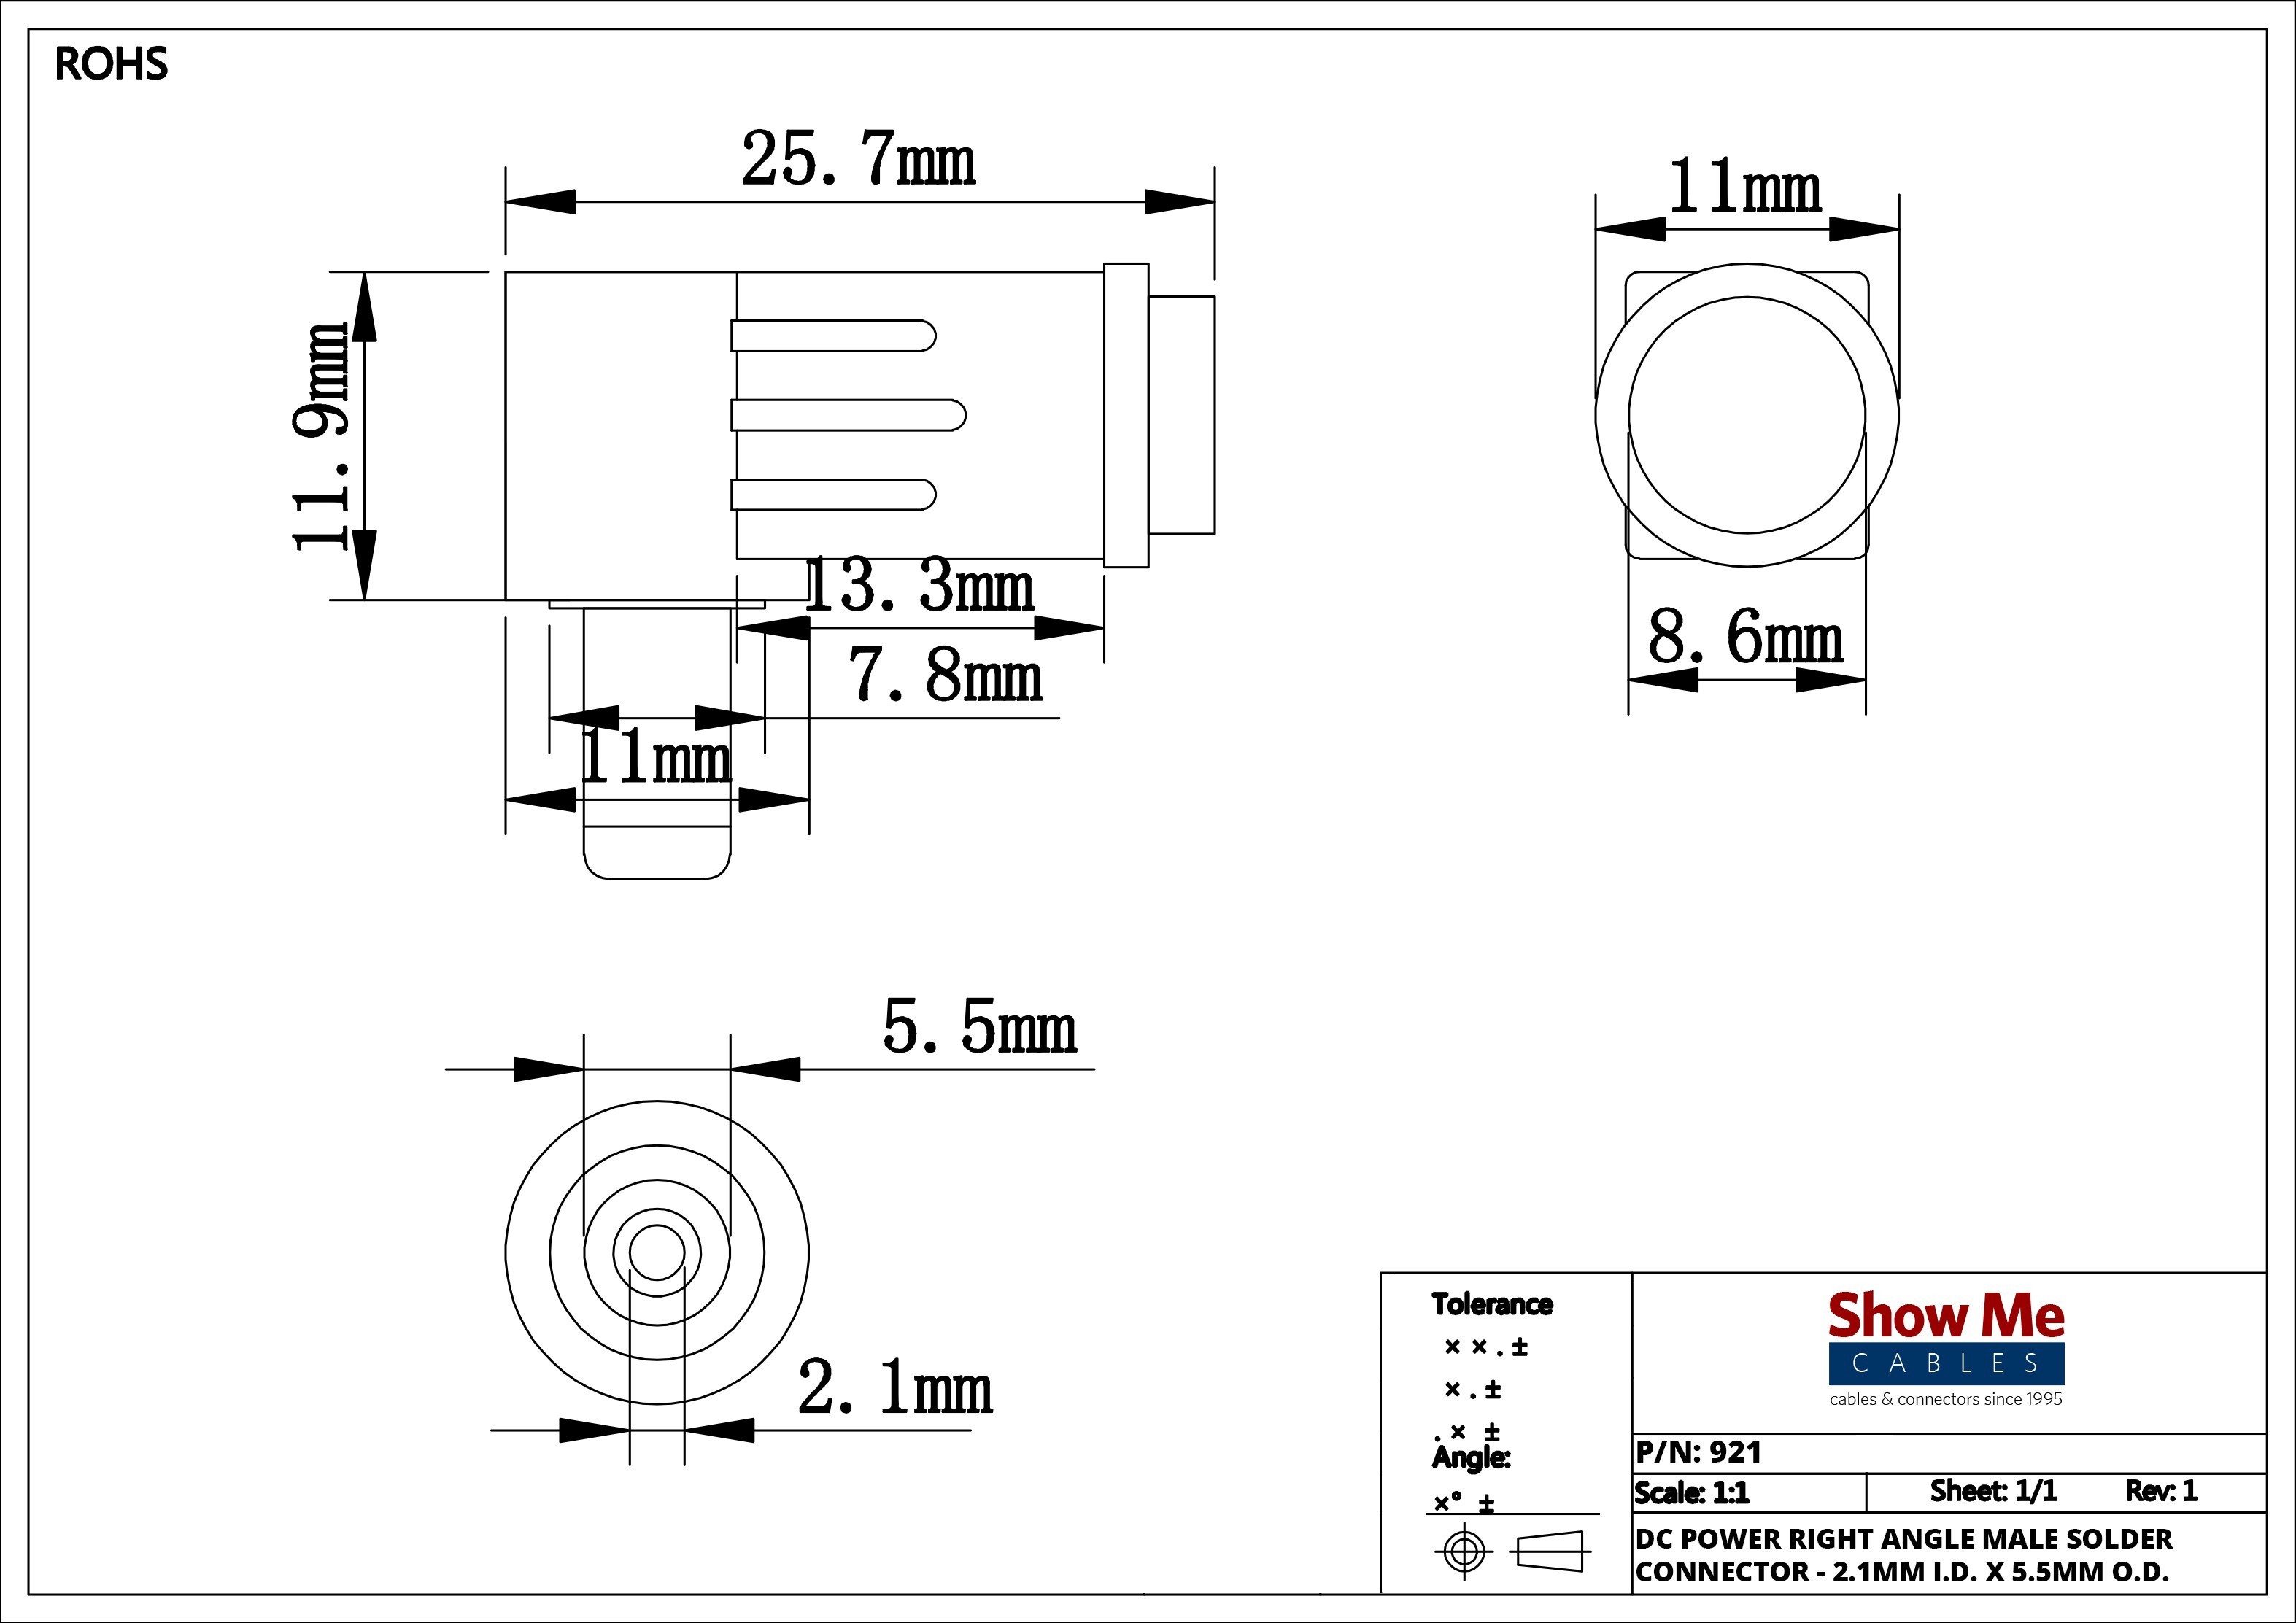 Whole House Wiring Diagram whole House Audio Wiring Diagram 3 5 Mm Stereo Jack Wiring Diagram Of Whole House Wiring Diagram